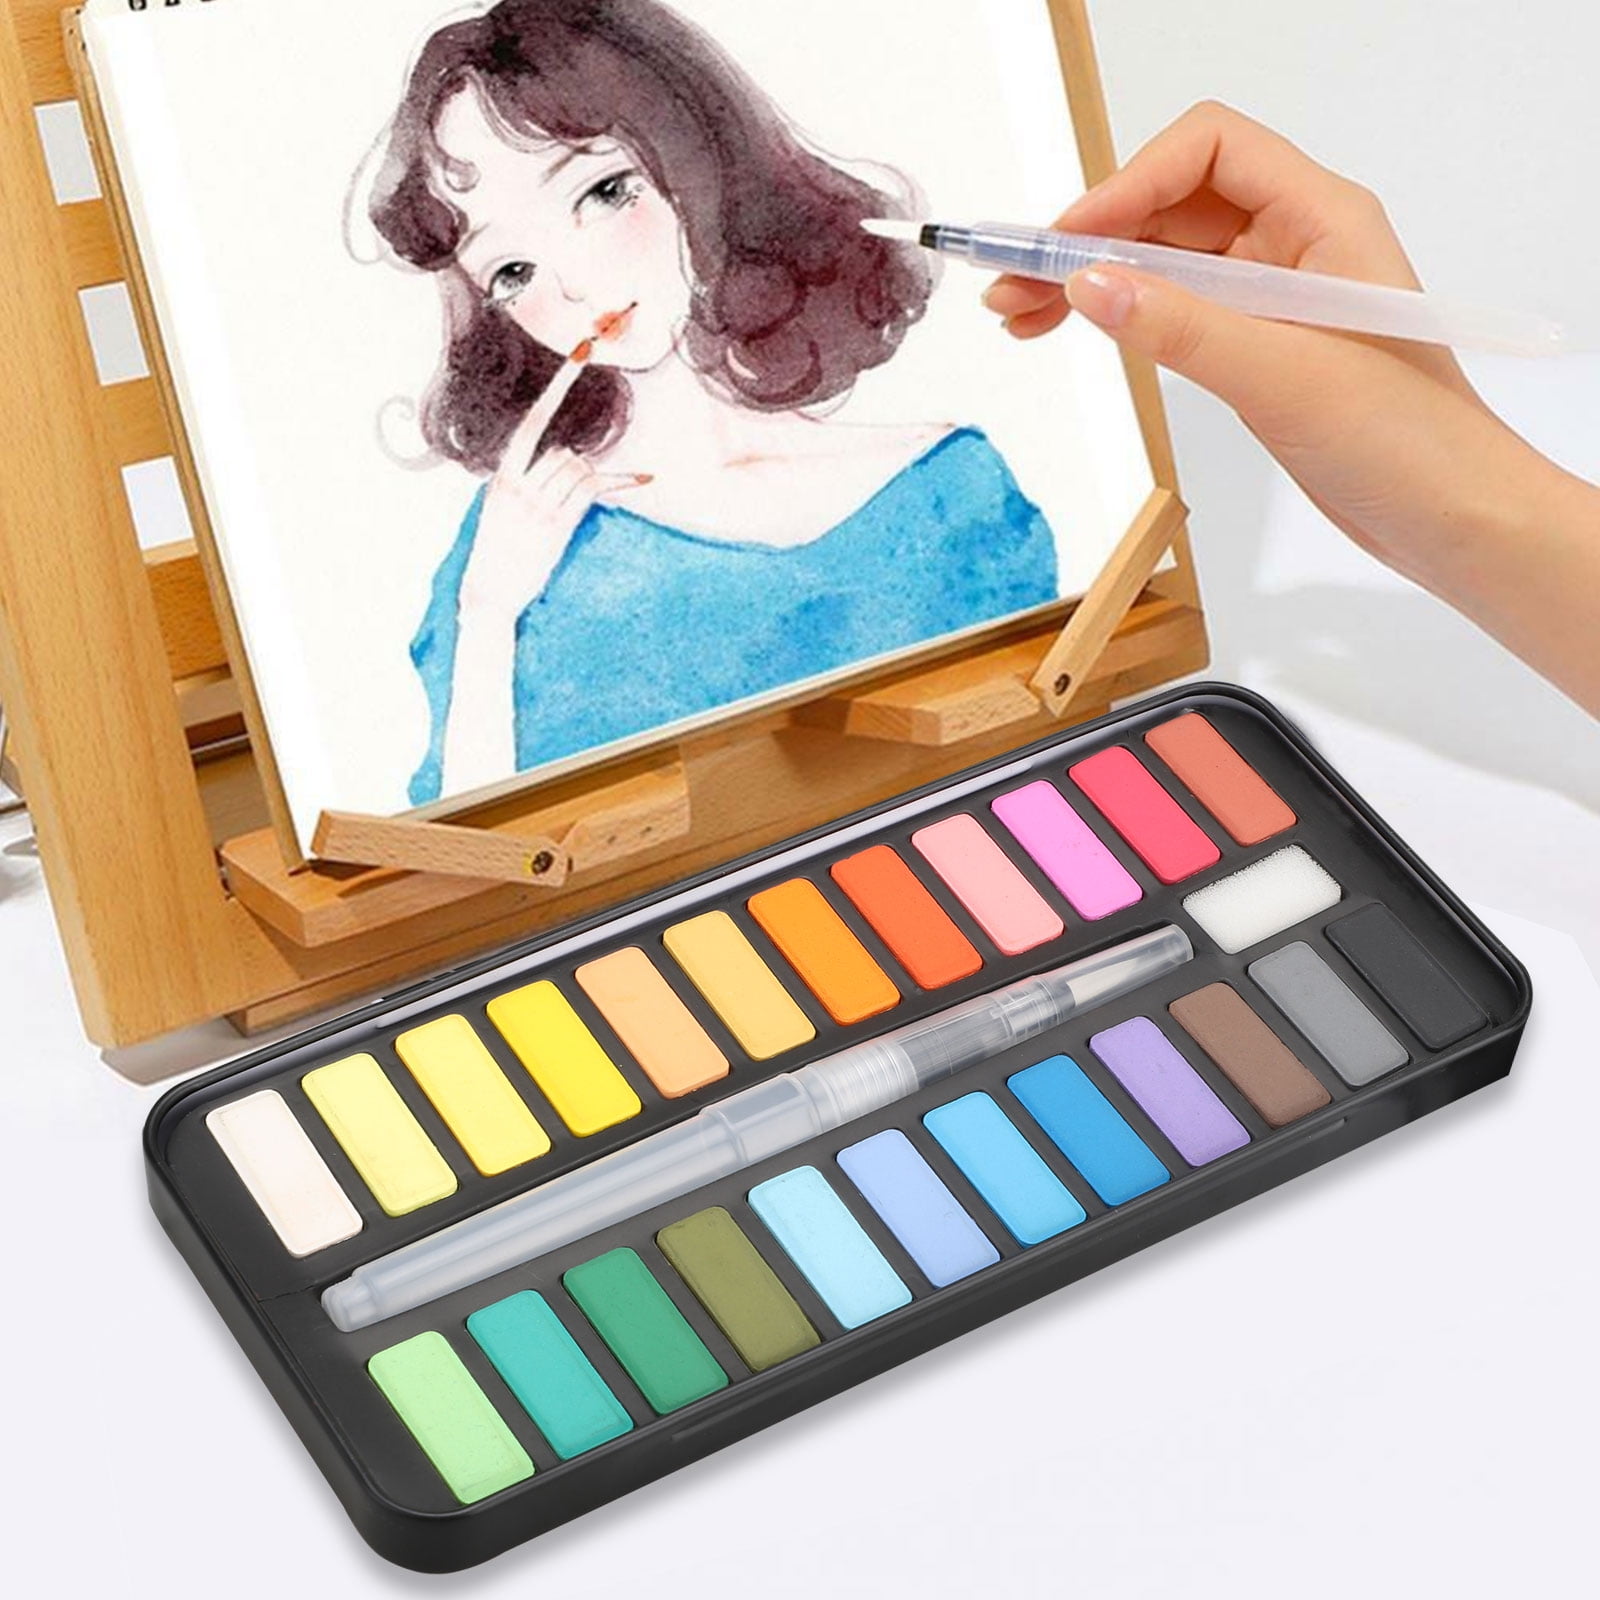 Each Palette Contains 12 Different Vibrant Colors a Paint Brush and a Mixing Pan Built into The Palette Watercolor Paint Set Multicolor, 3 Pack 